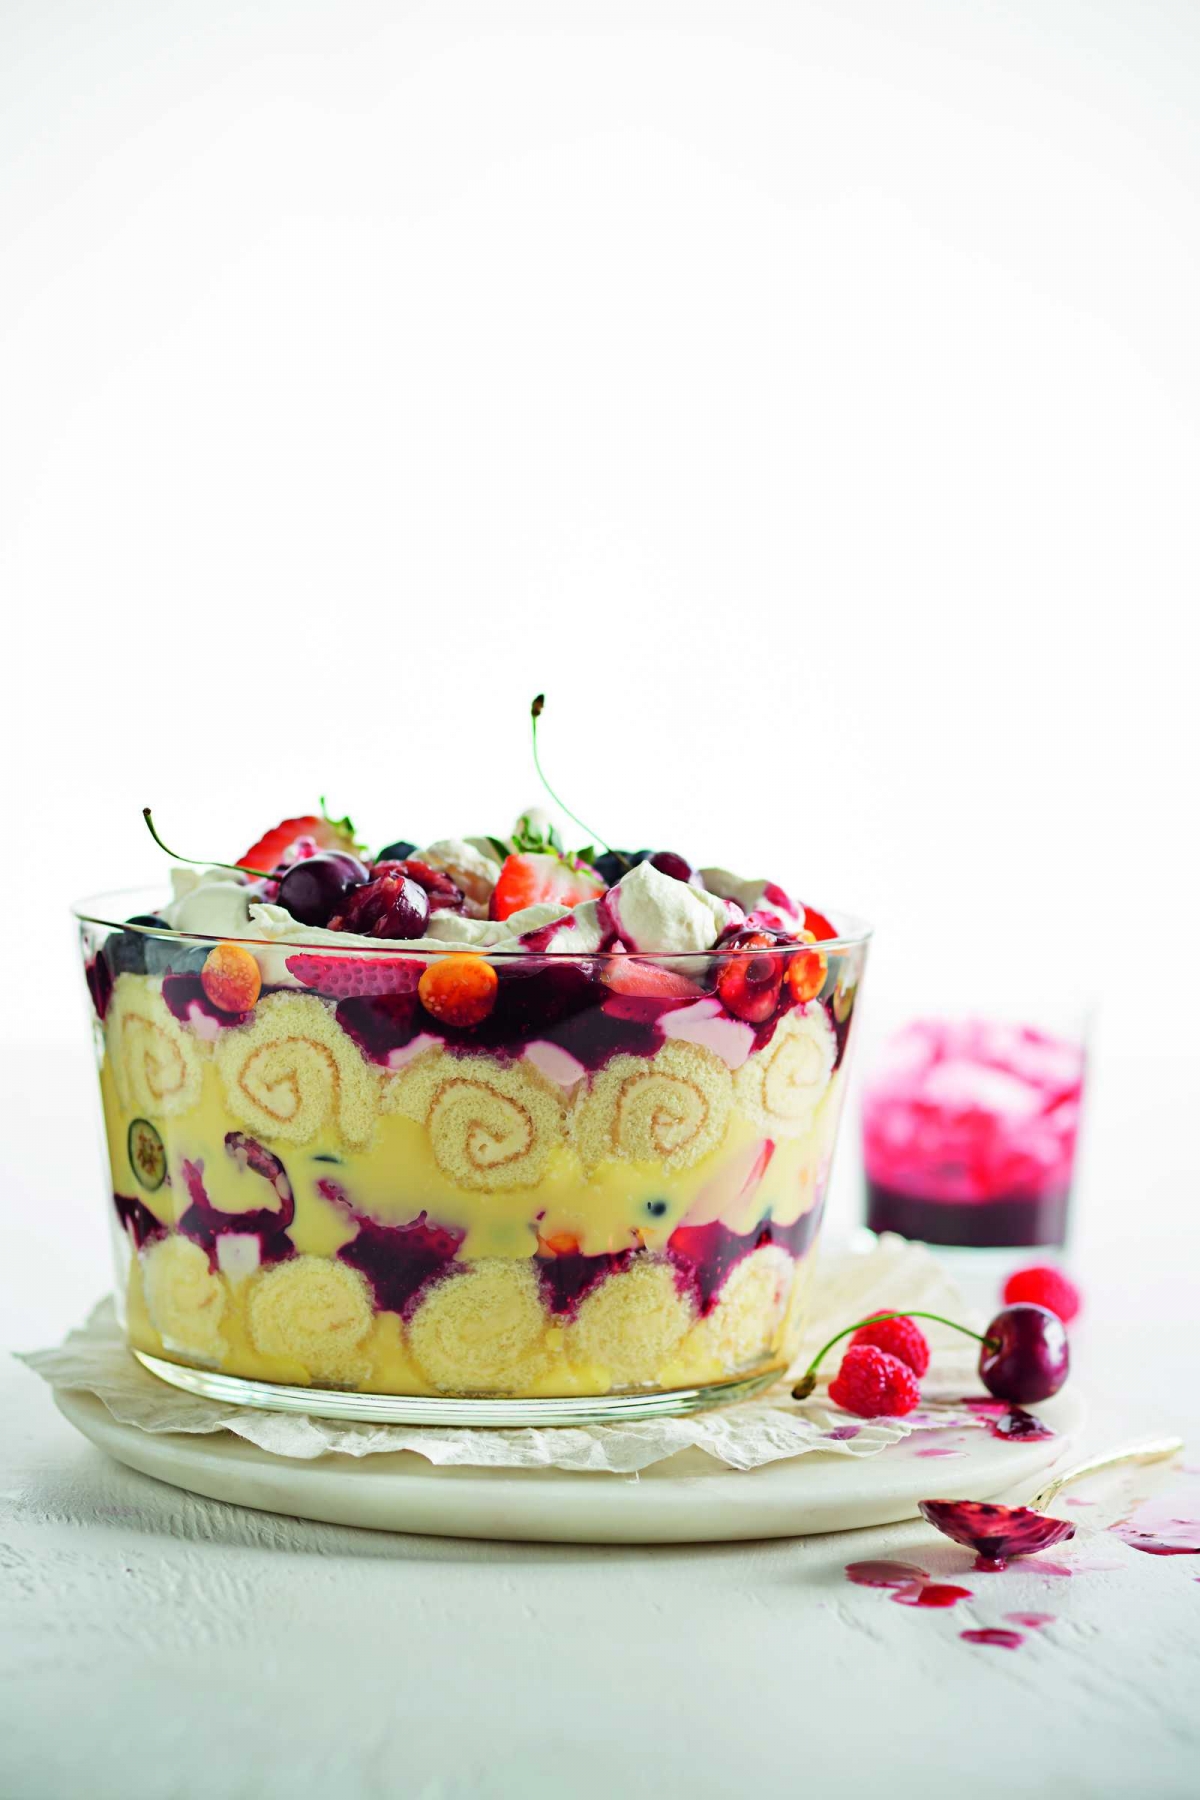 Siba's Famous Trifle